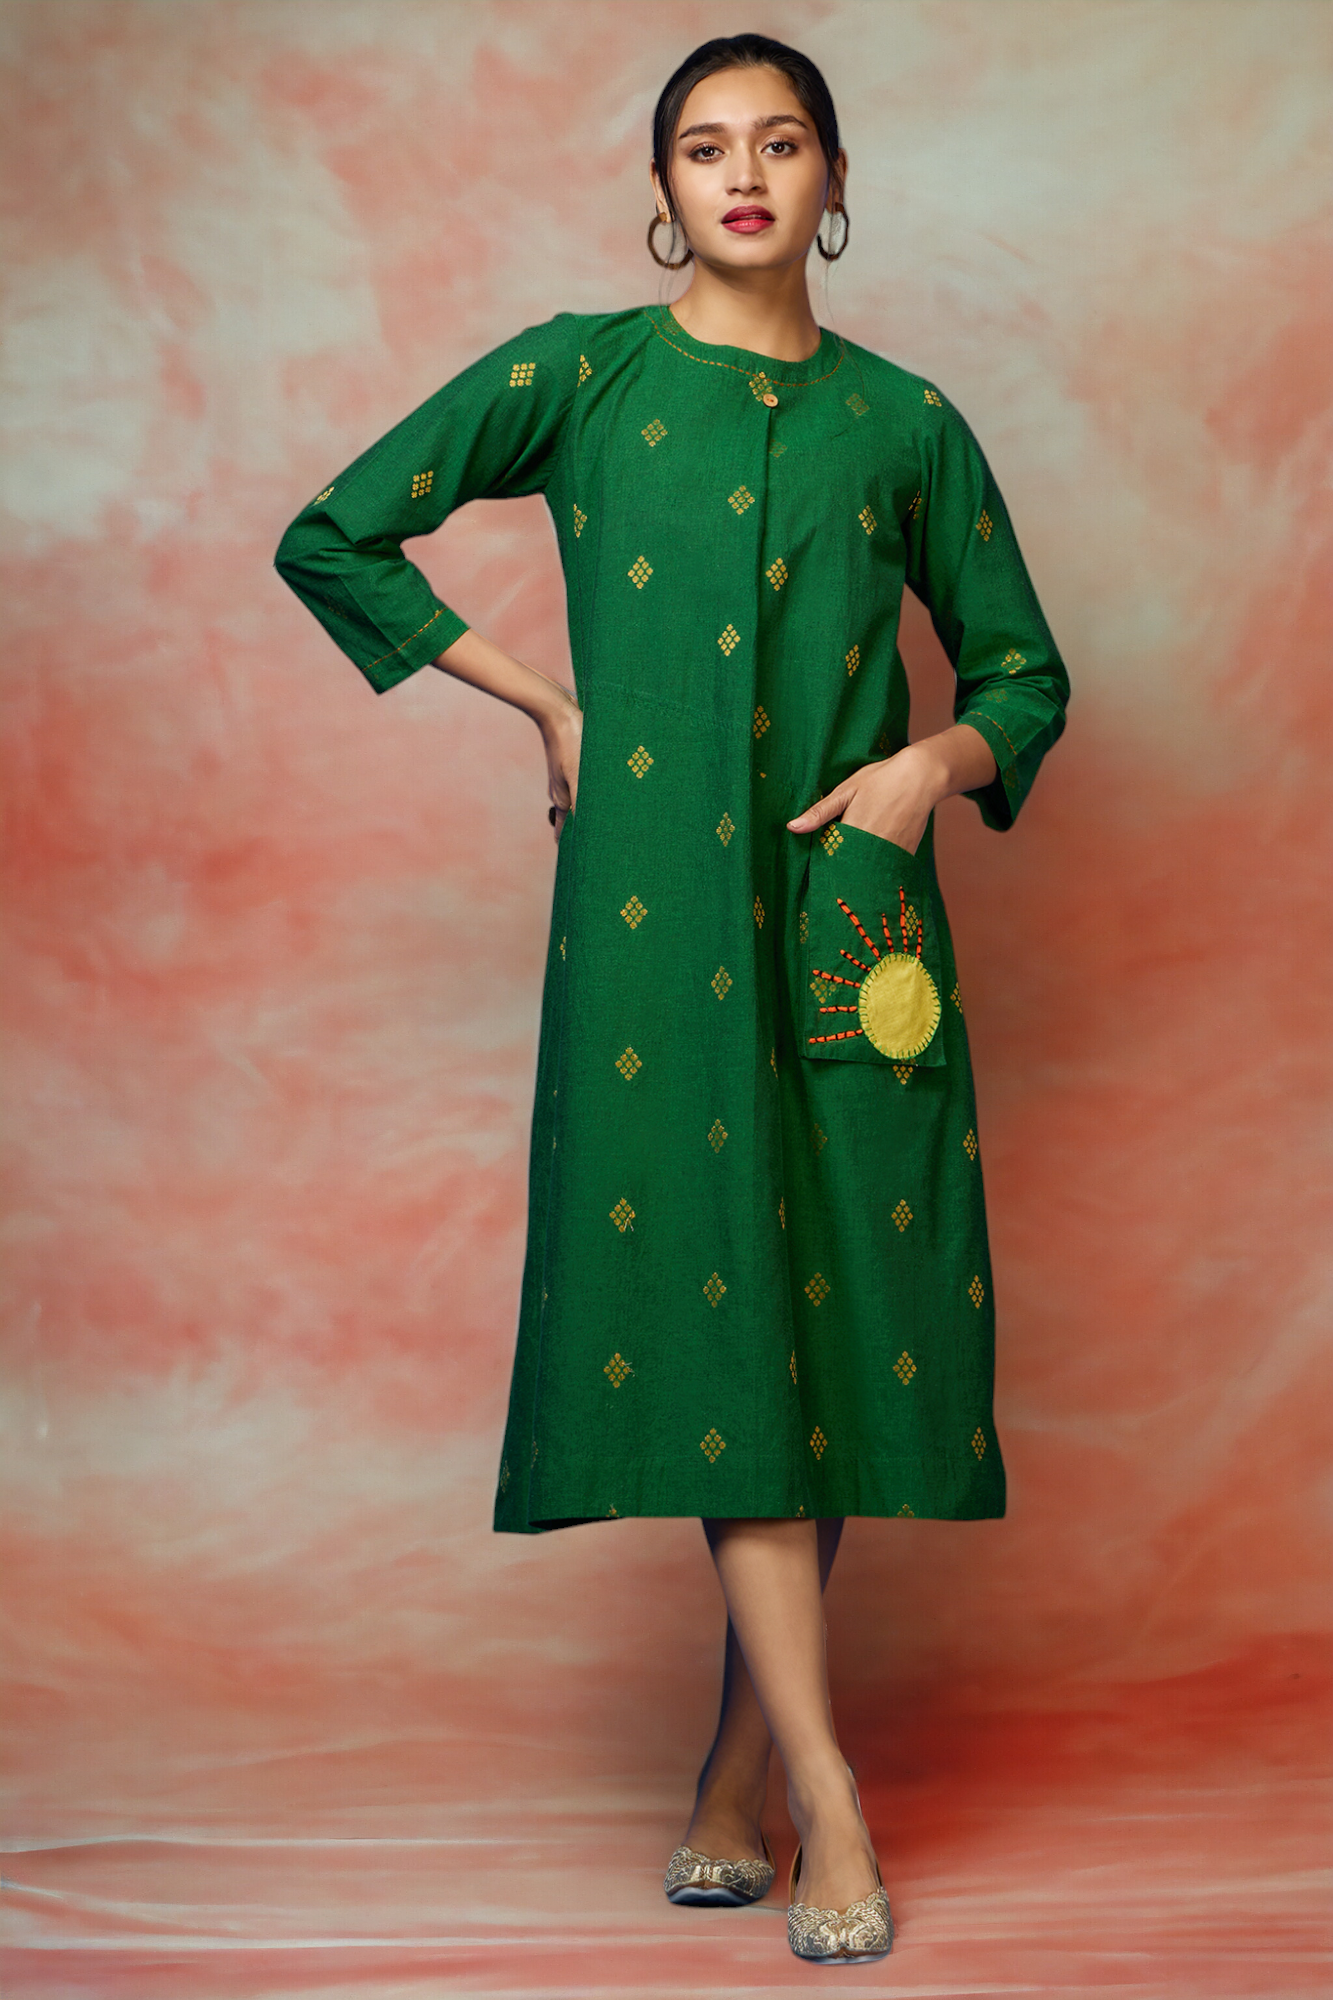 a-line dress with patch pocket - dark jade & metallic sunburst